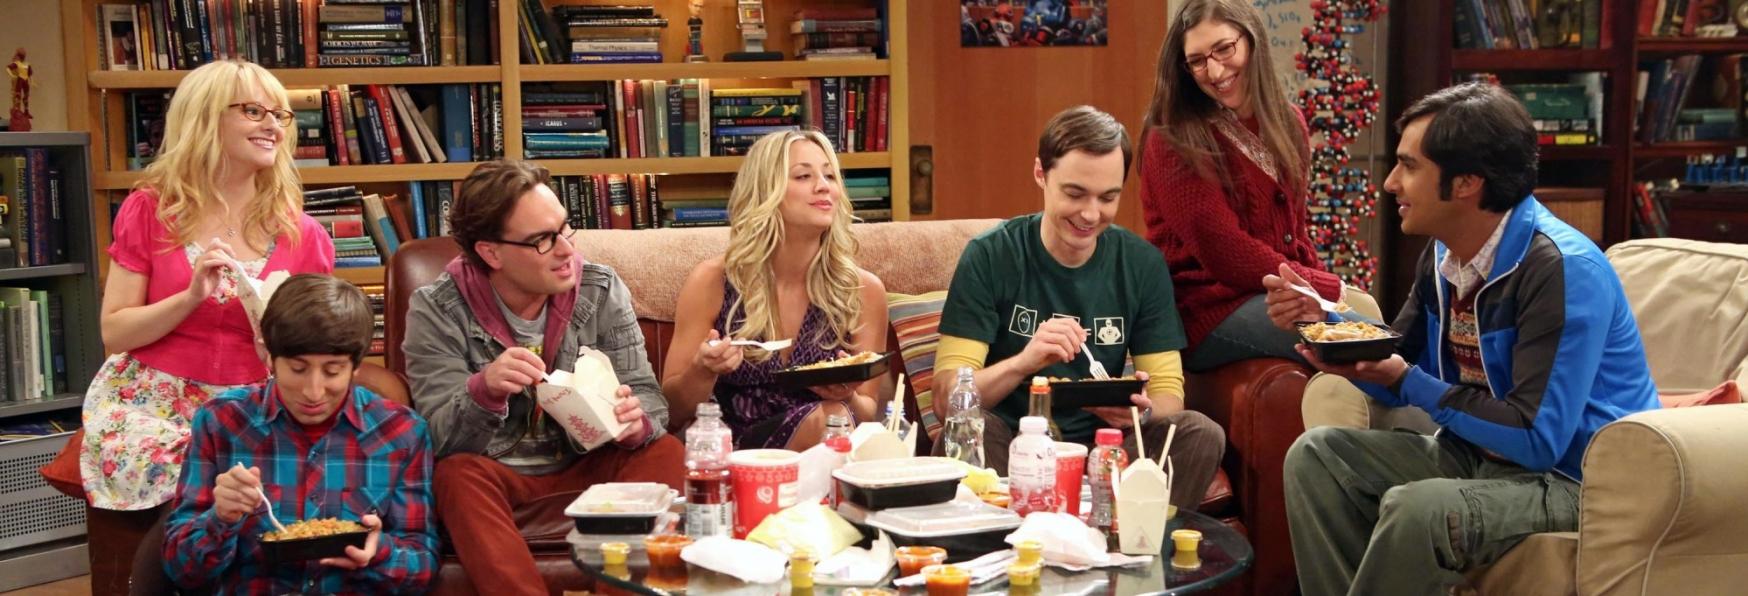 The Big Bang Theory, Modern Family e molte altre Serie TV in arrivo su Mediaset